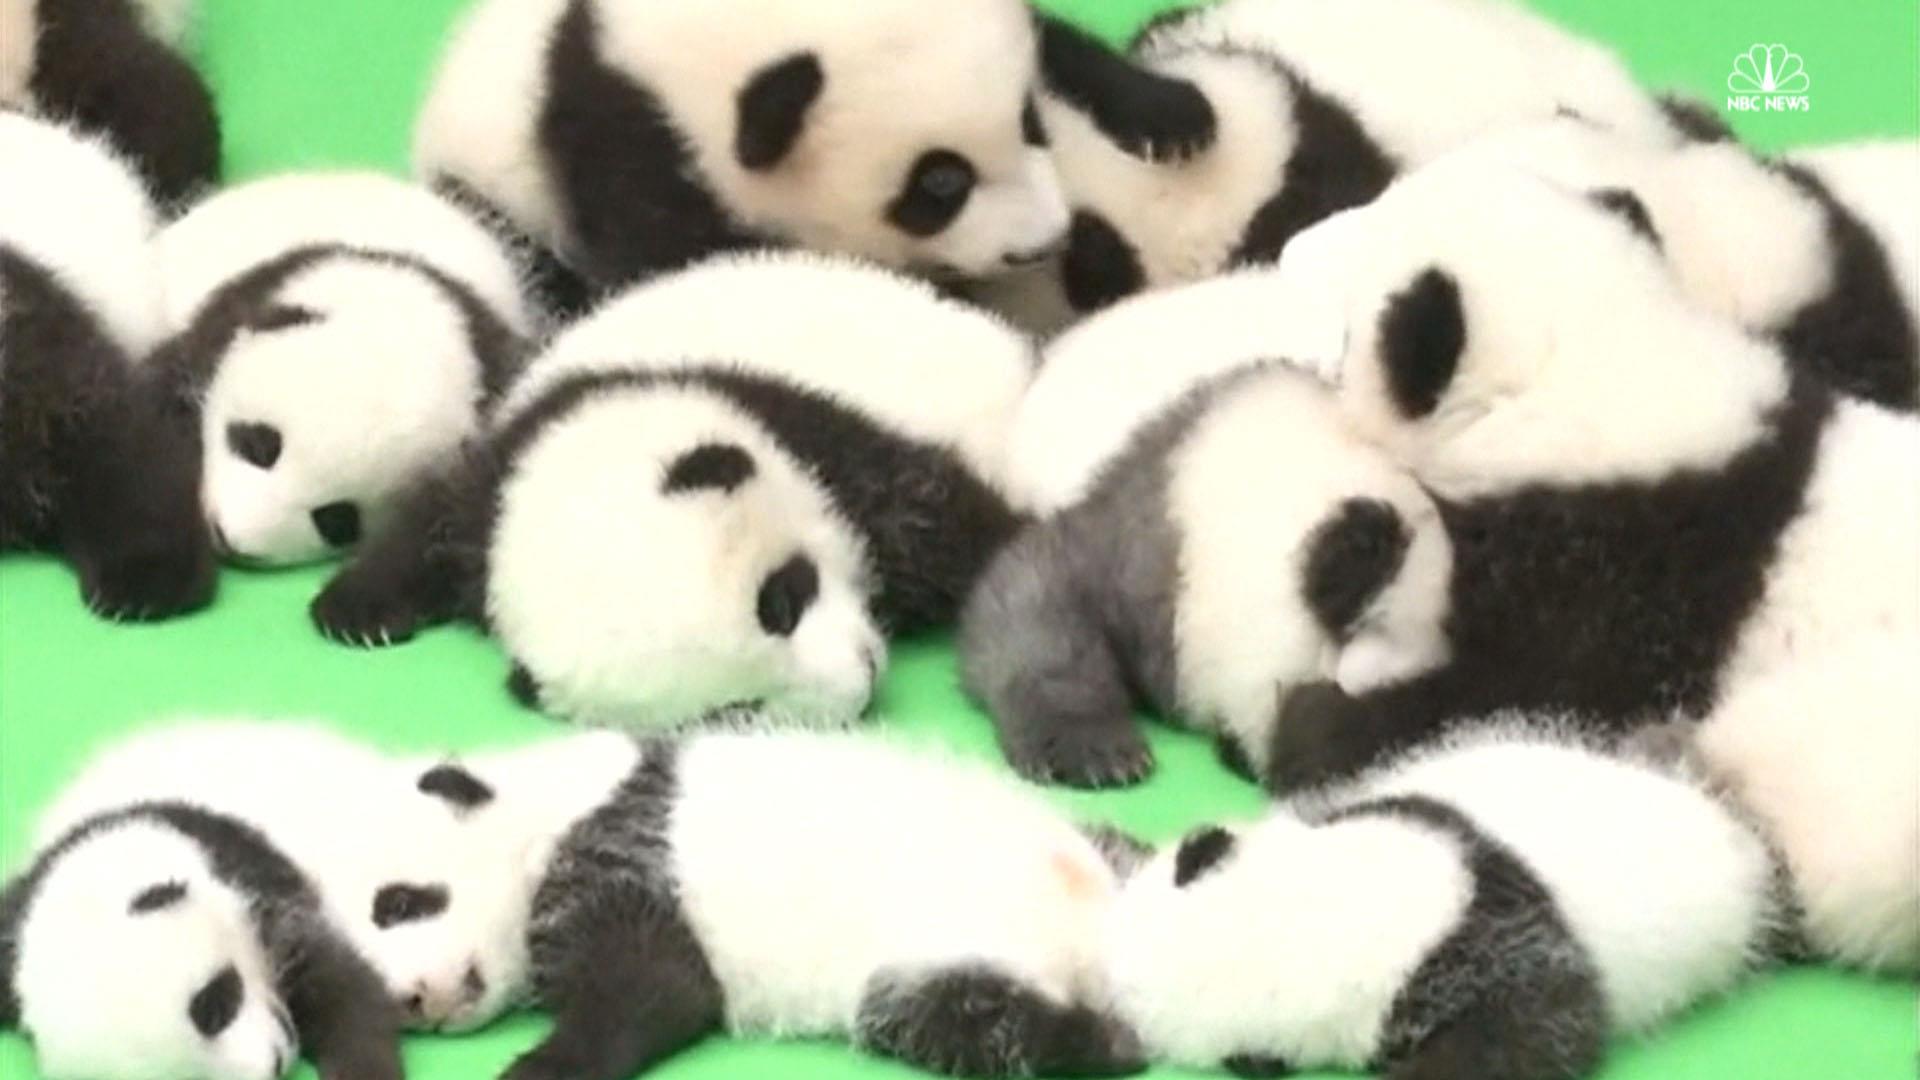 23 Cute Giant Panda Cubs Make Mass Public Debut - NBC News